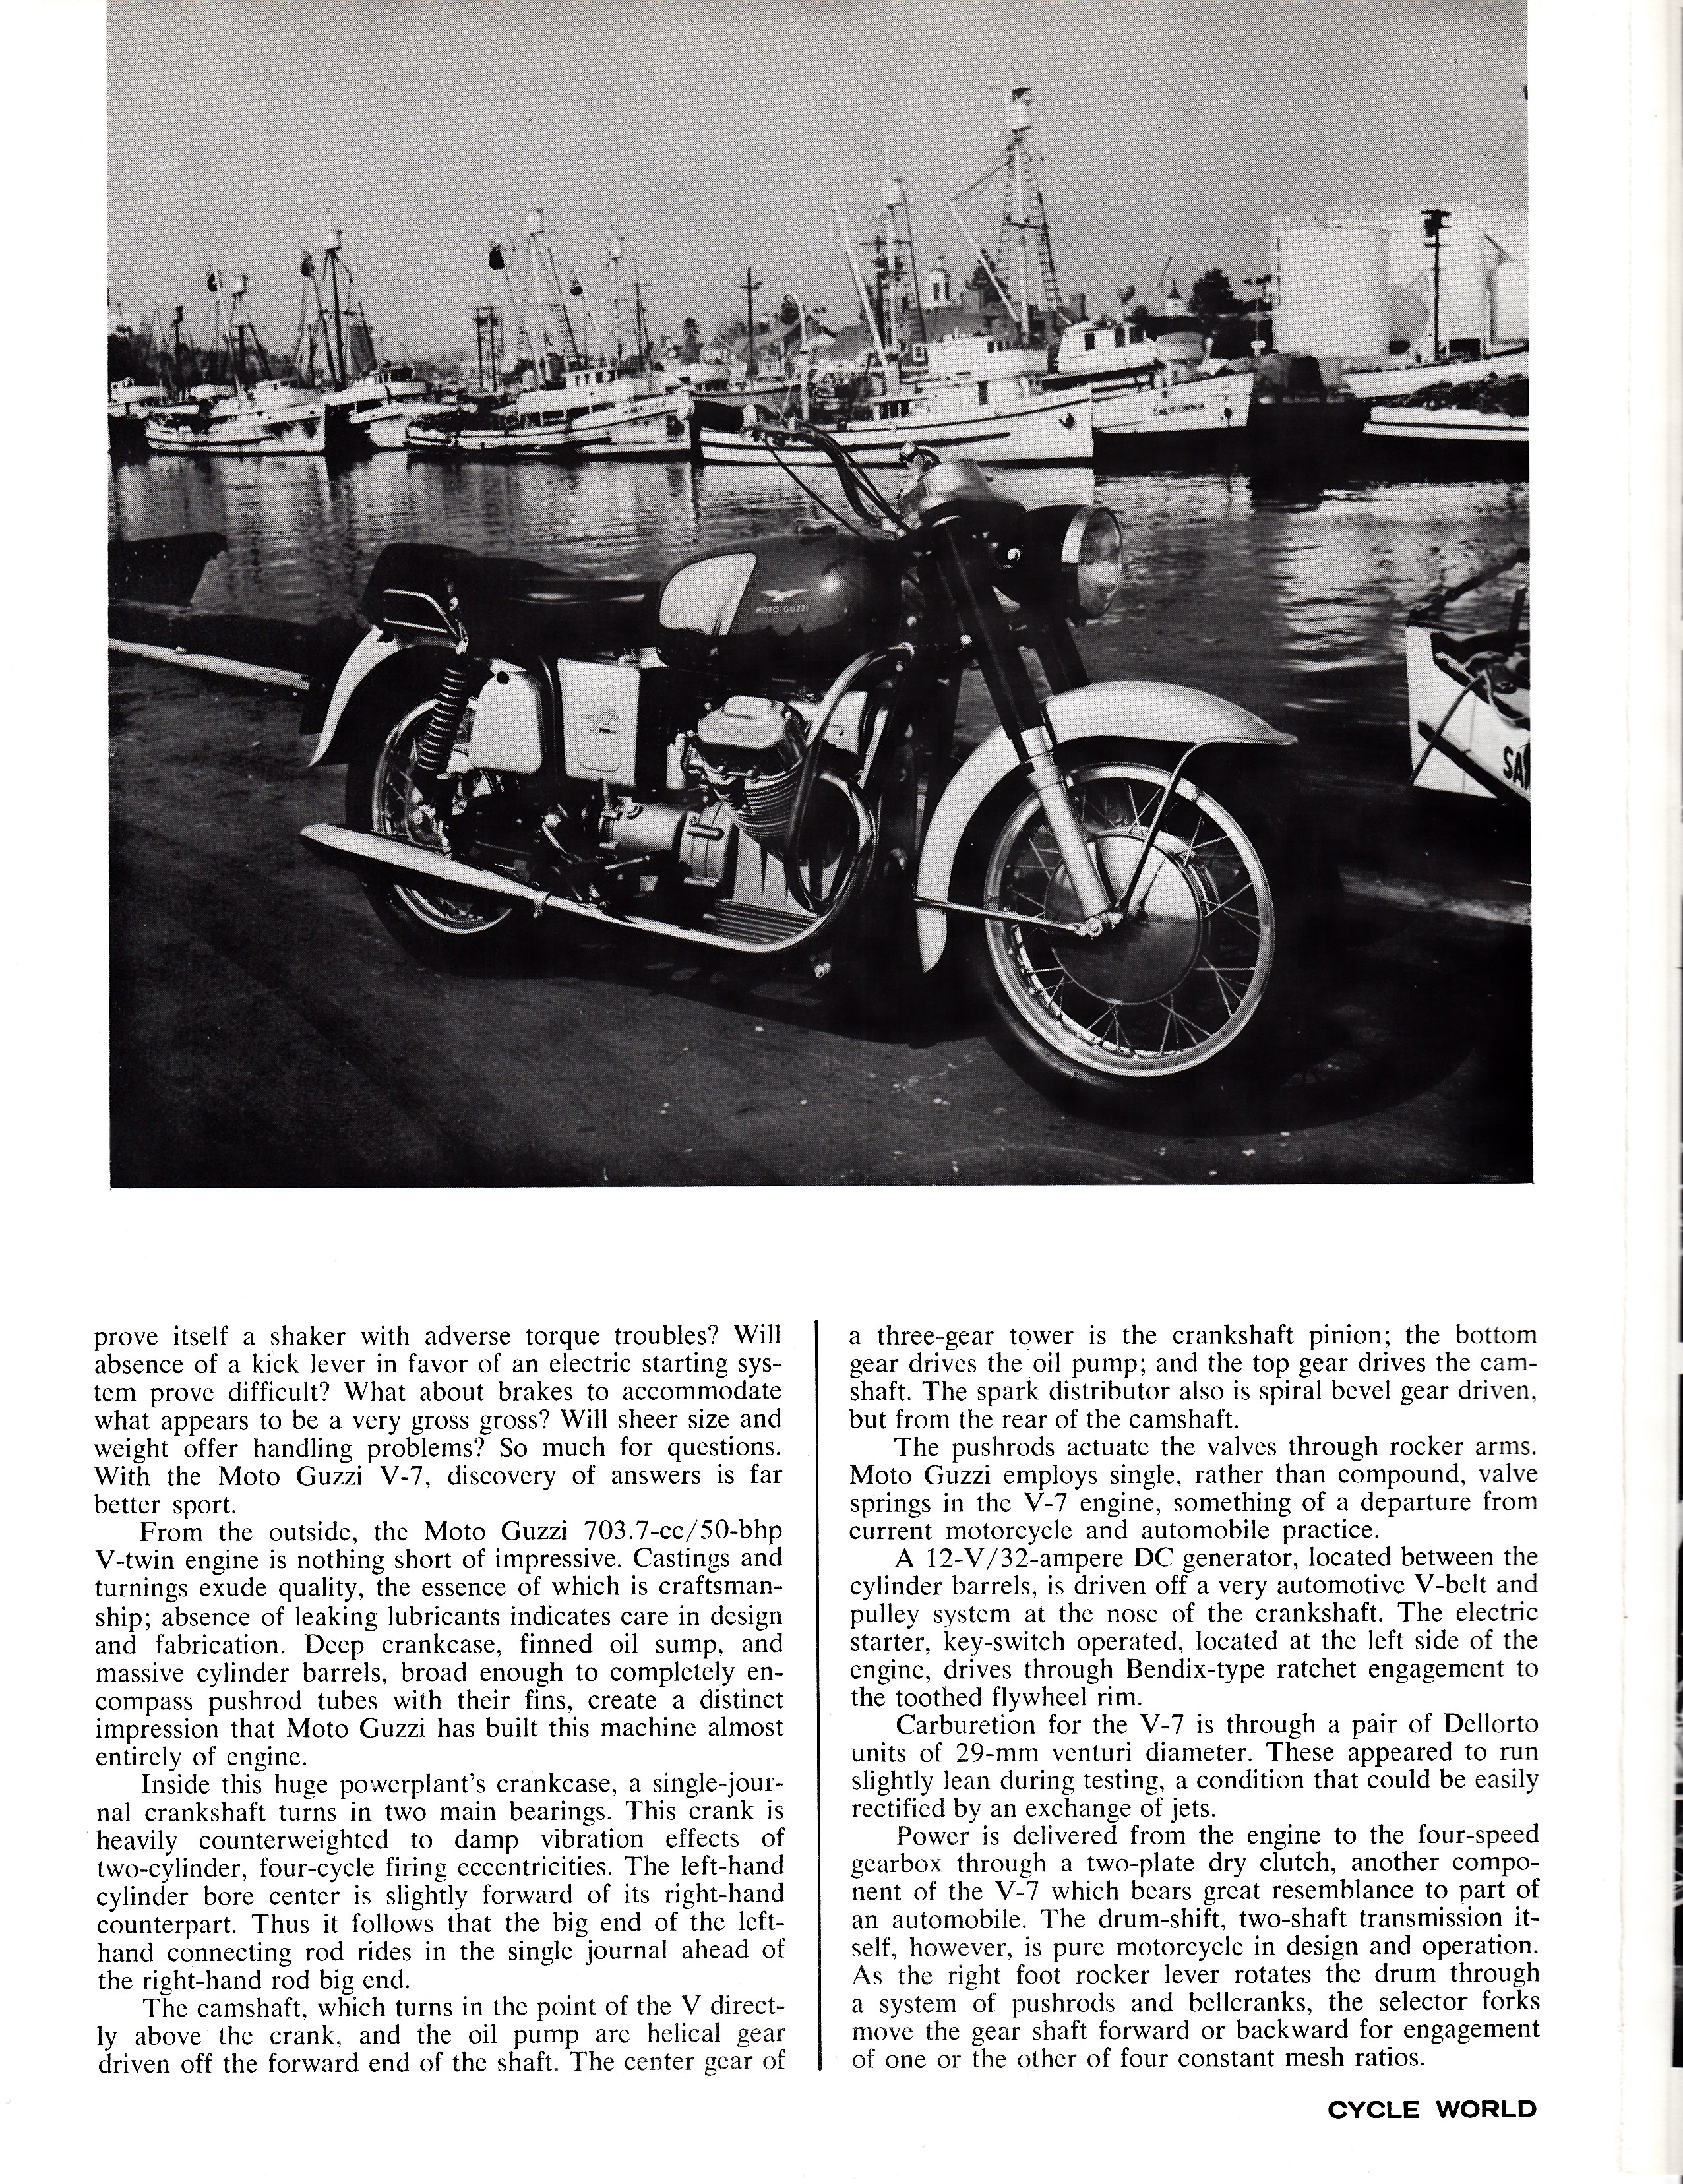 Moto Guzzi V700 factory brochure of magazine reviews, Page 2 of 8.